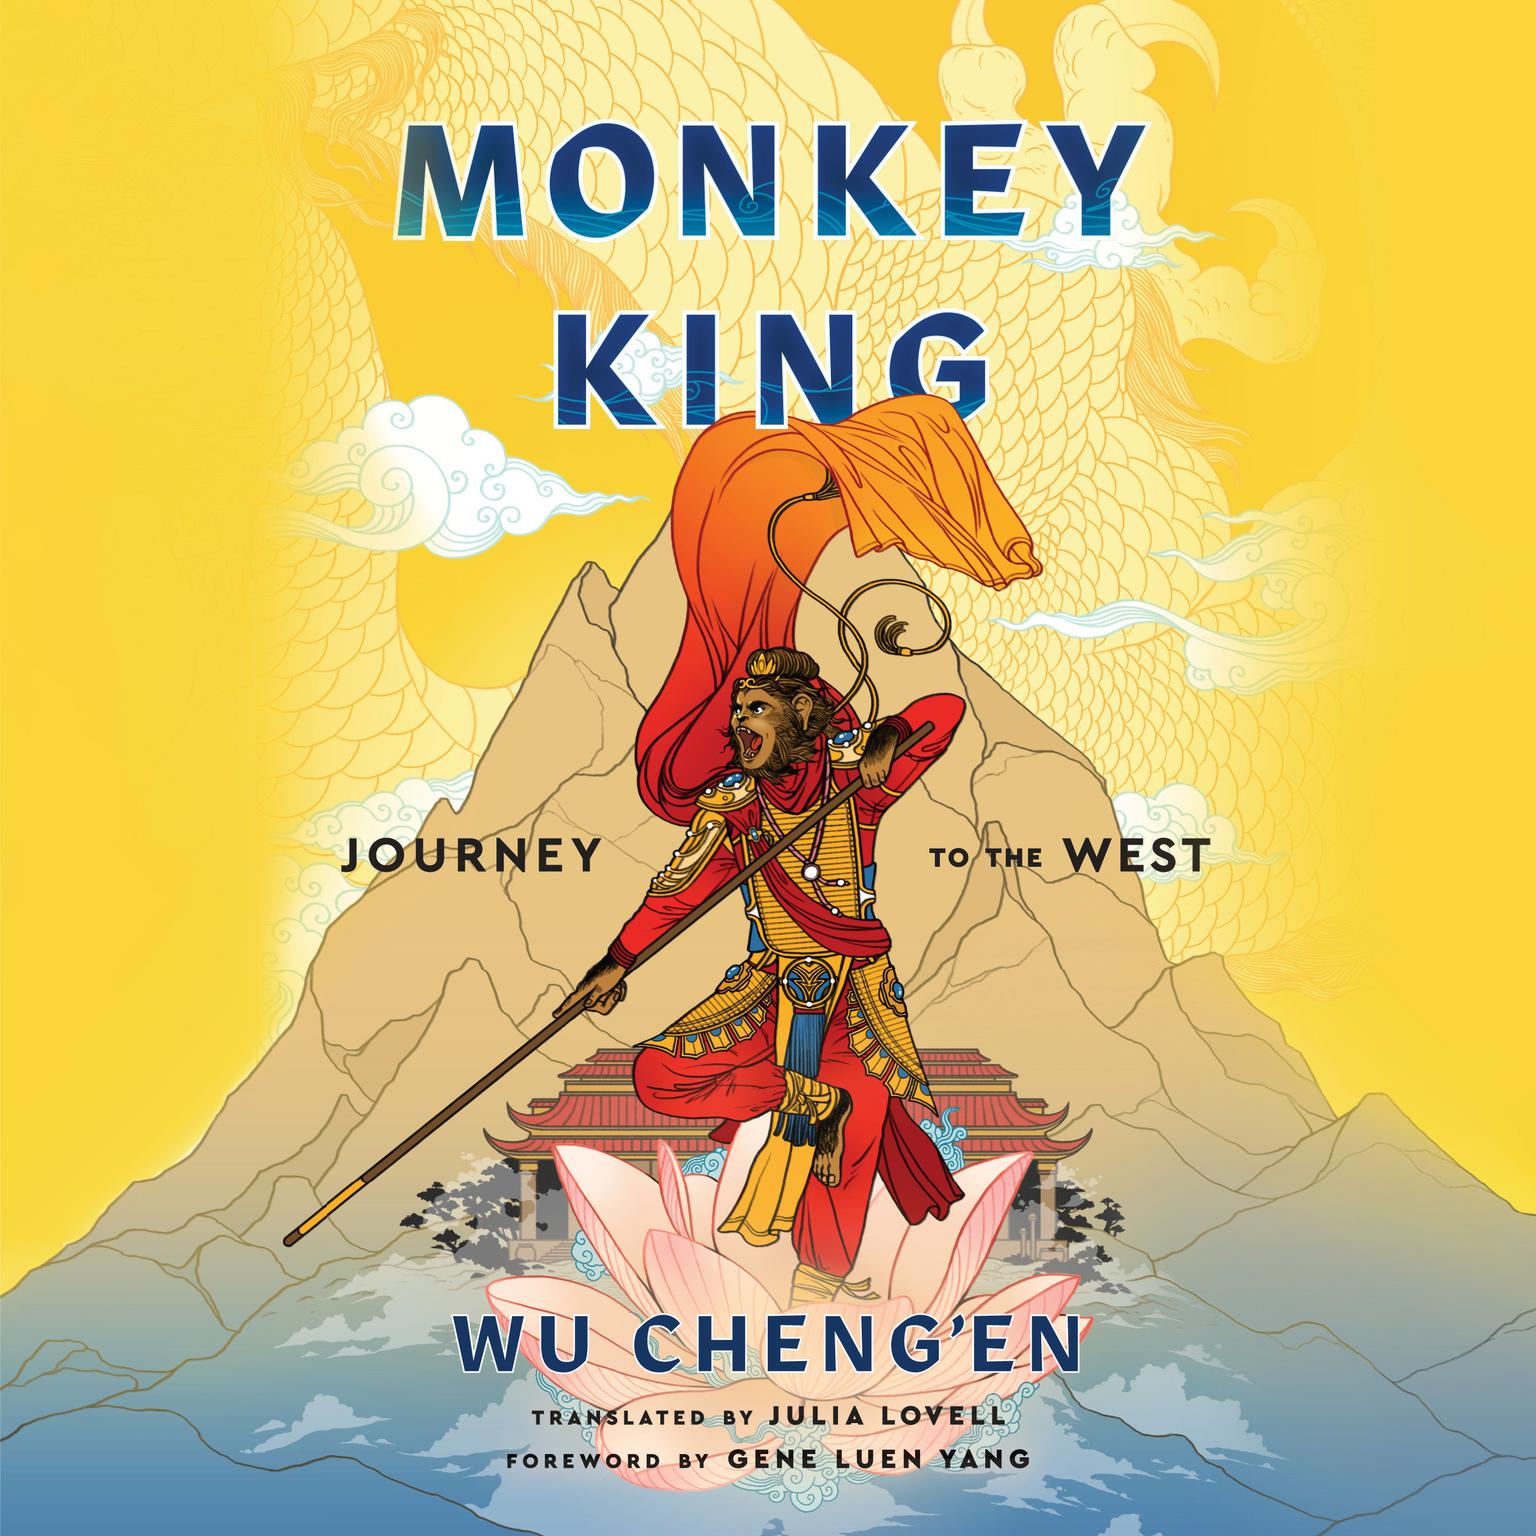 Monkey King - Audiobook | Listen Instantly!